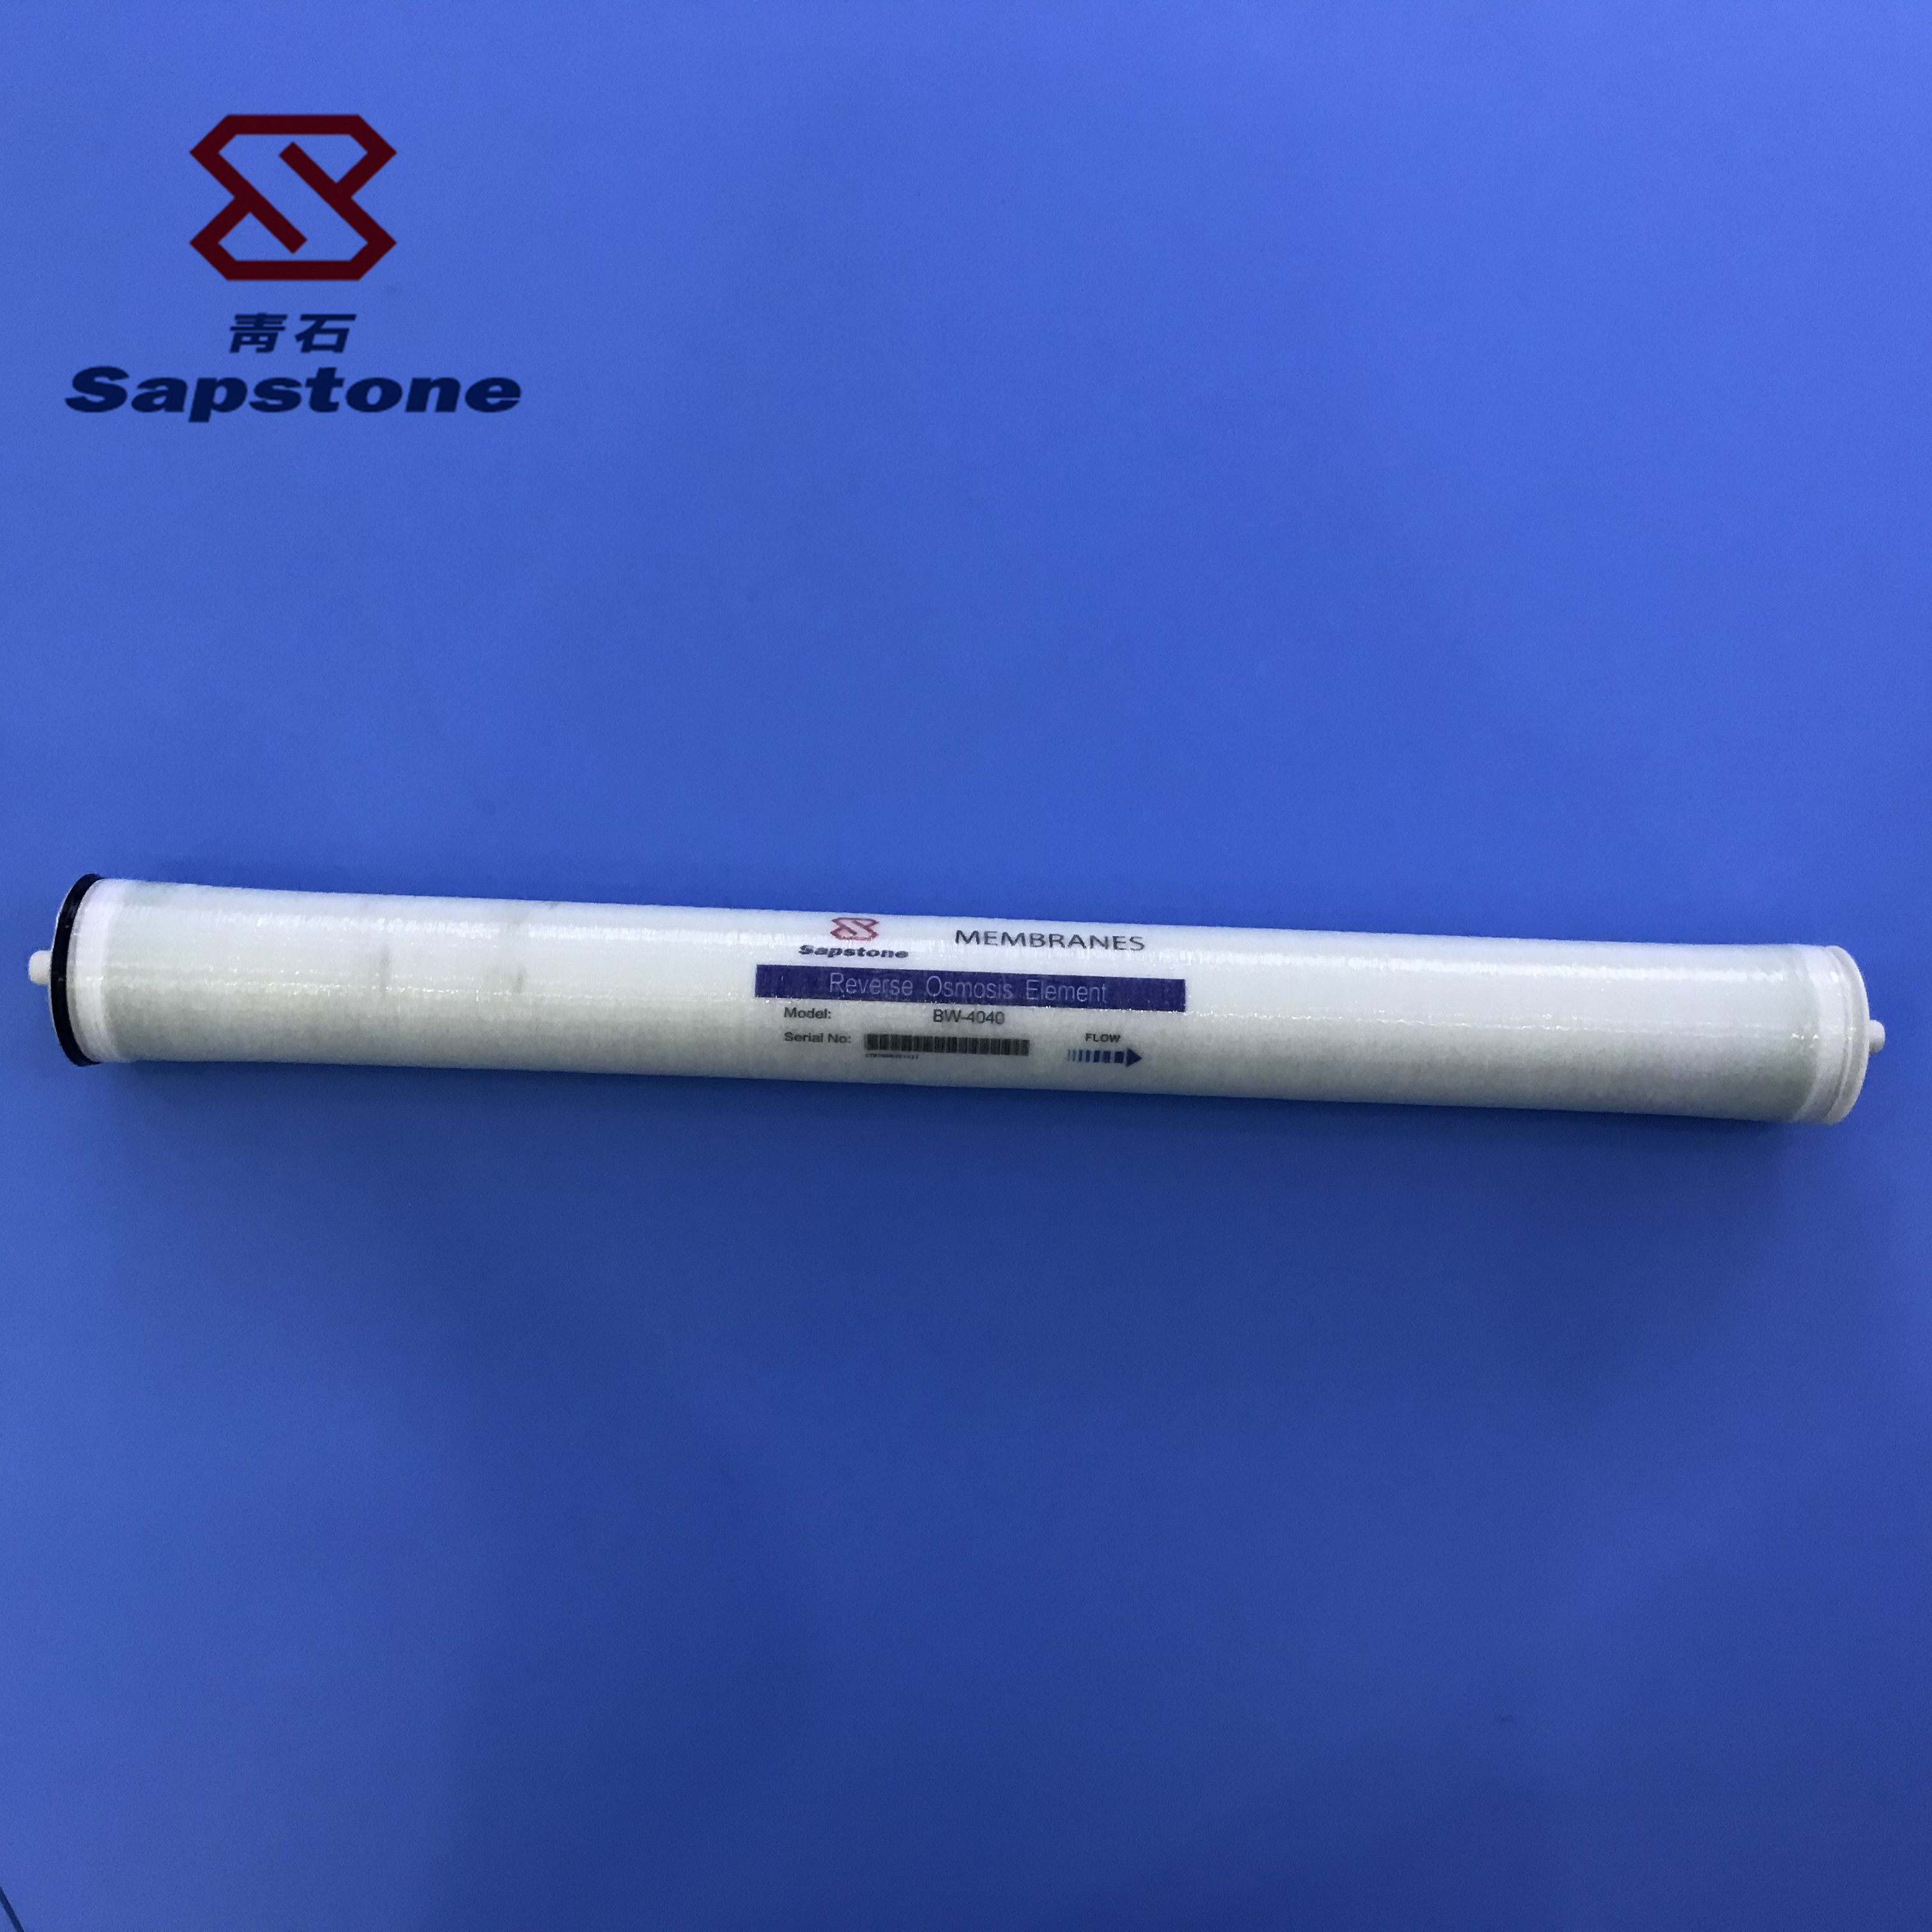 Sapstone ro membrane 4040